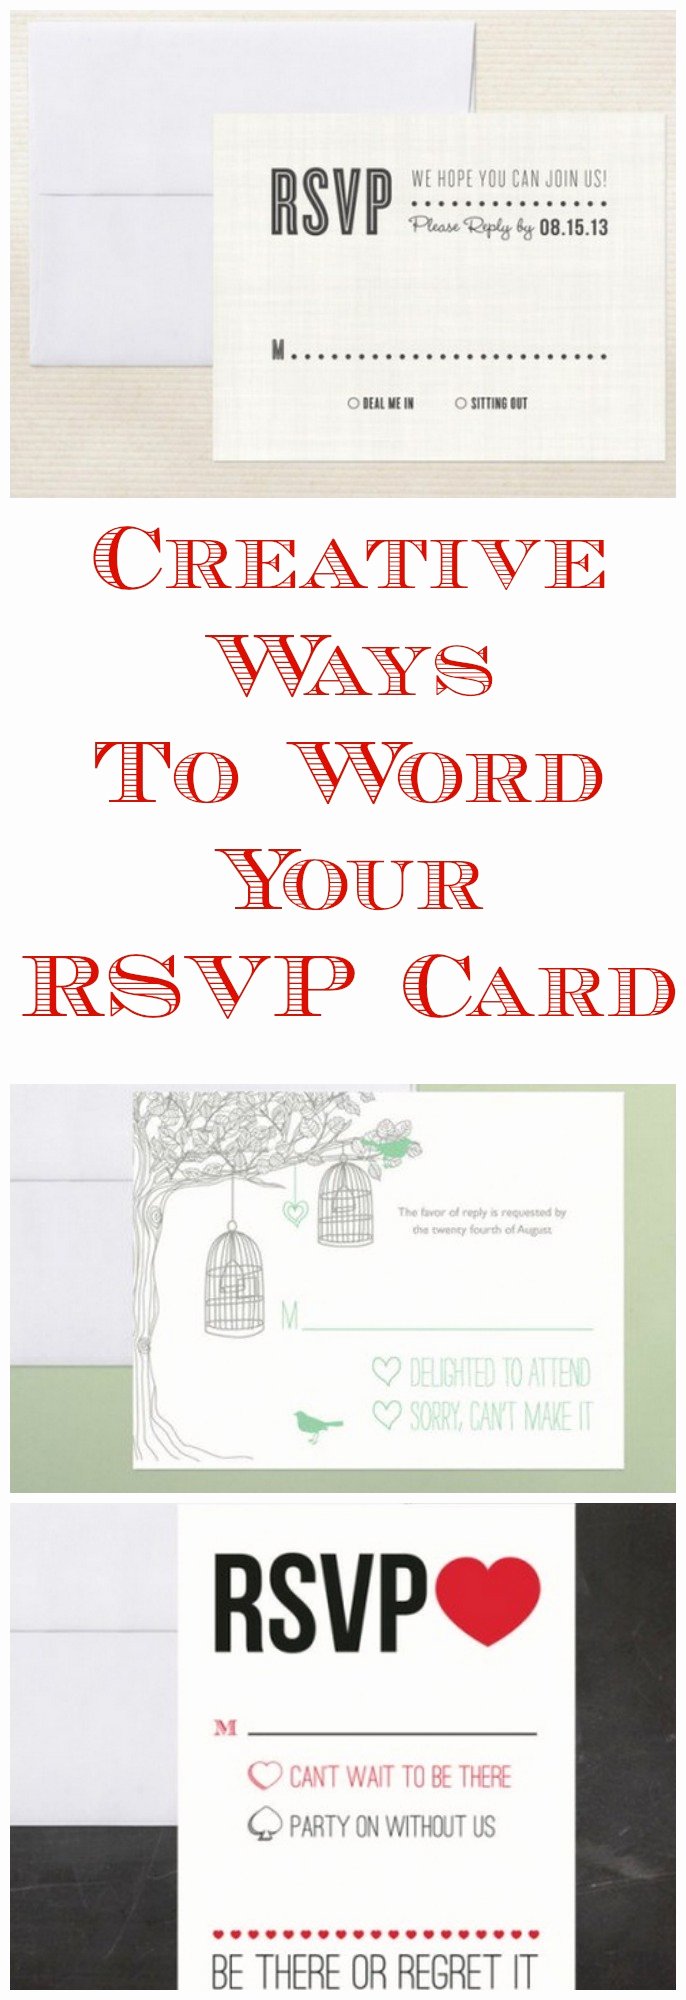 Rsvp Online Wording Elegant Wedding Rsvp Wording How to Uniquely Word Your Wedding